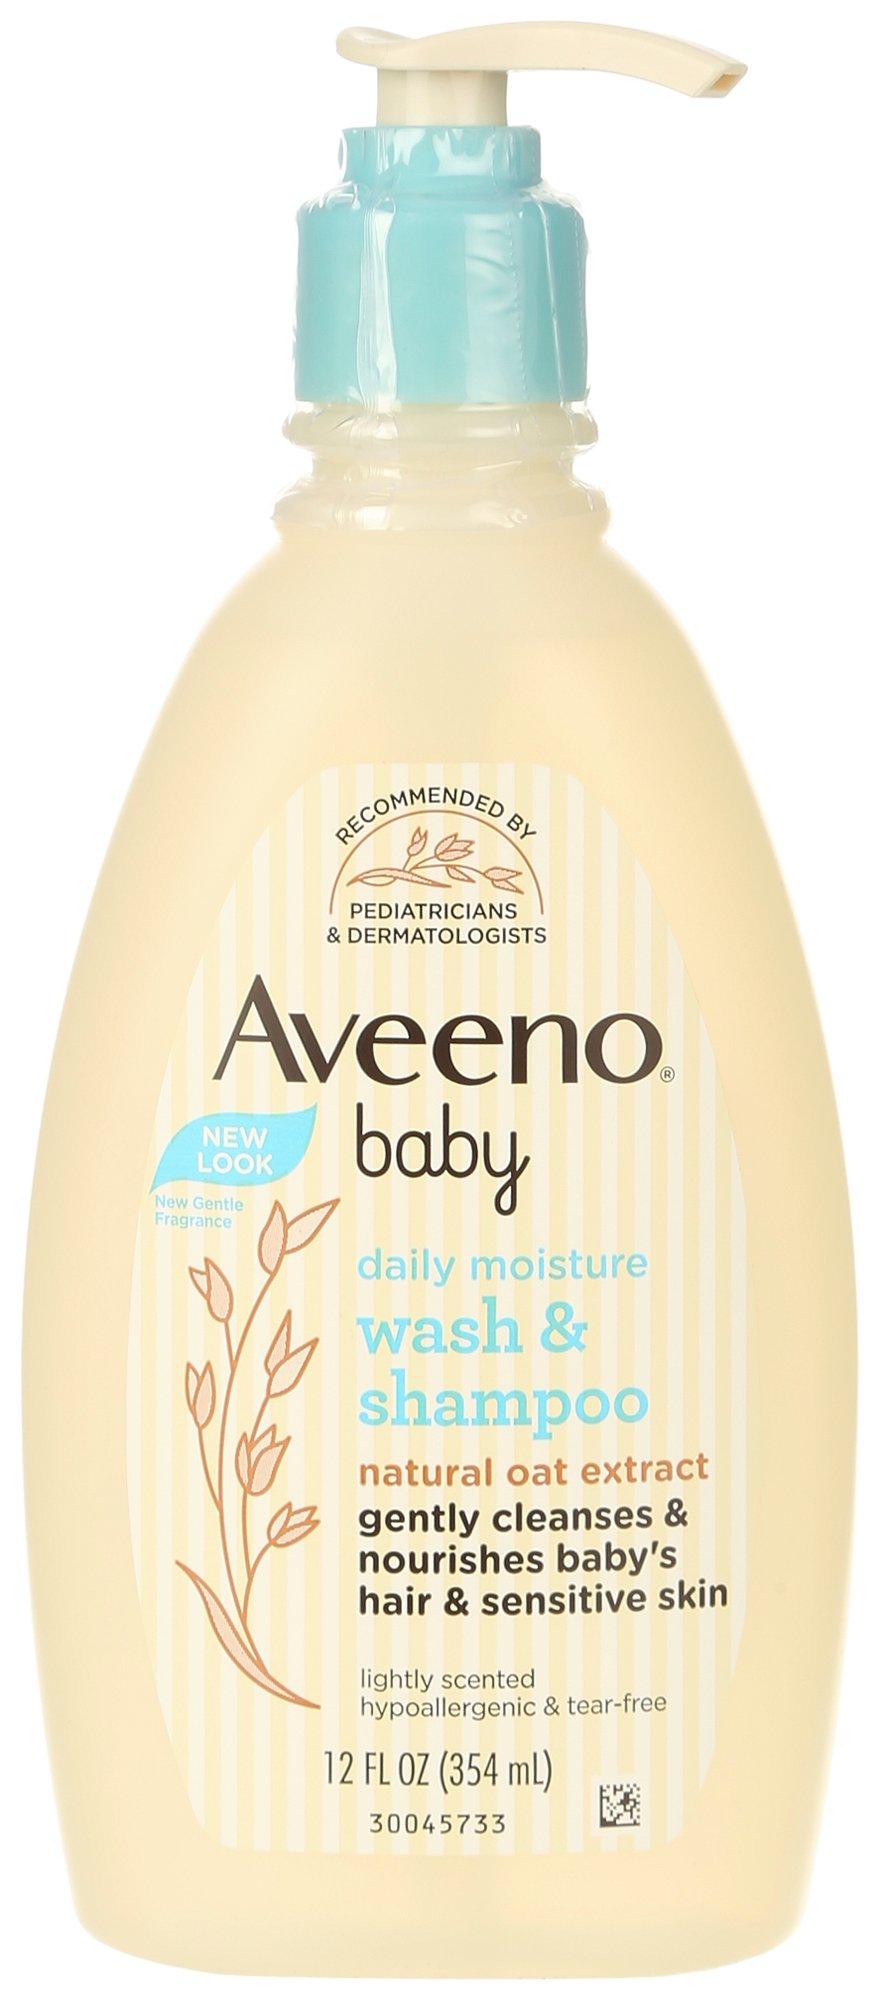 Aveeno Baby 12 Fl.Oz. Daily Moisture Wash & Shampoo